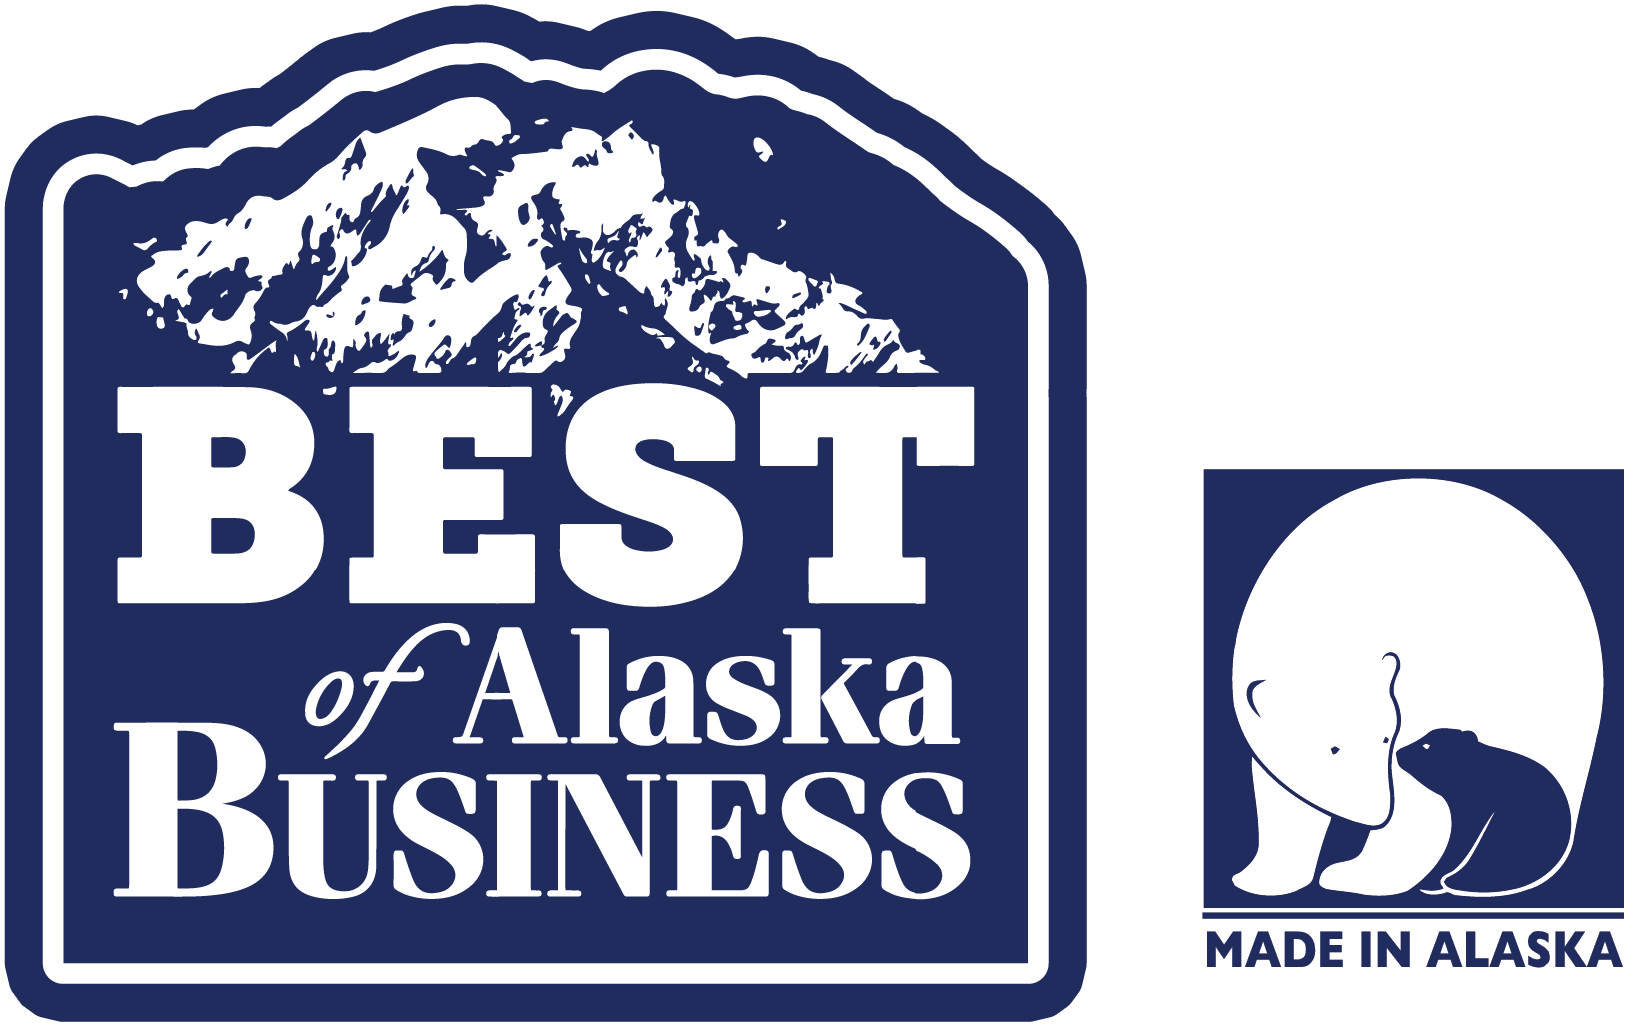 Best of Alaska Business and Made in Alaska Logos